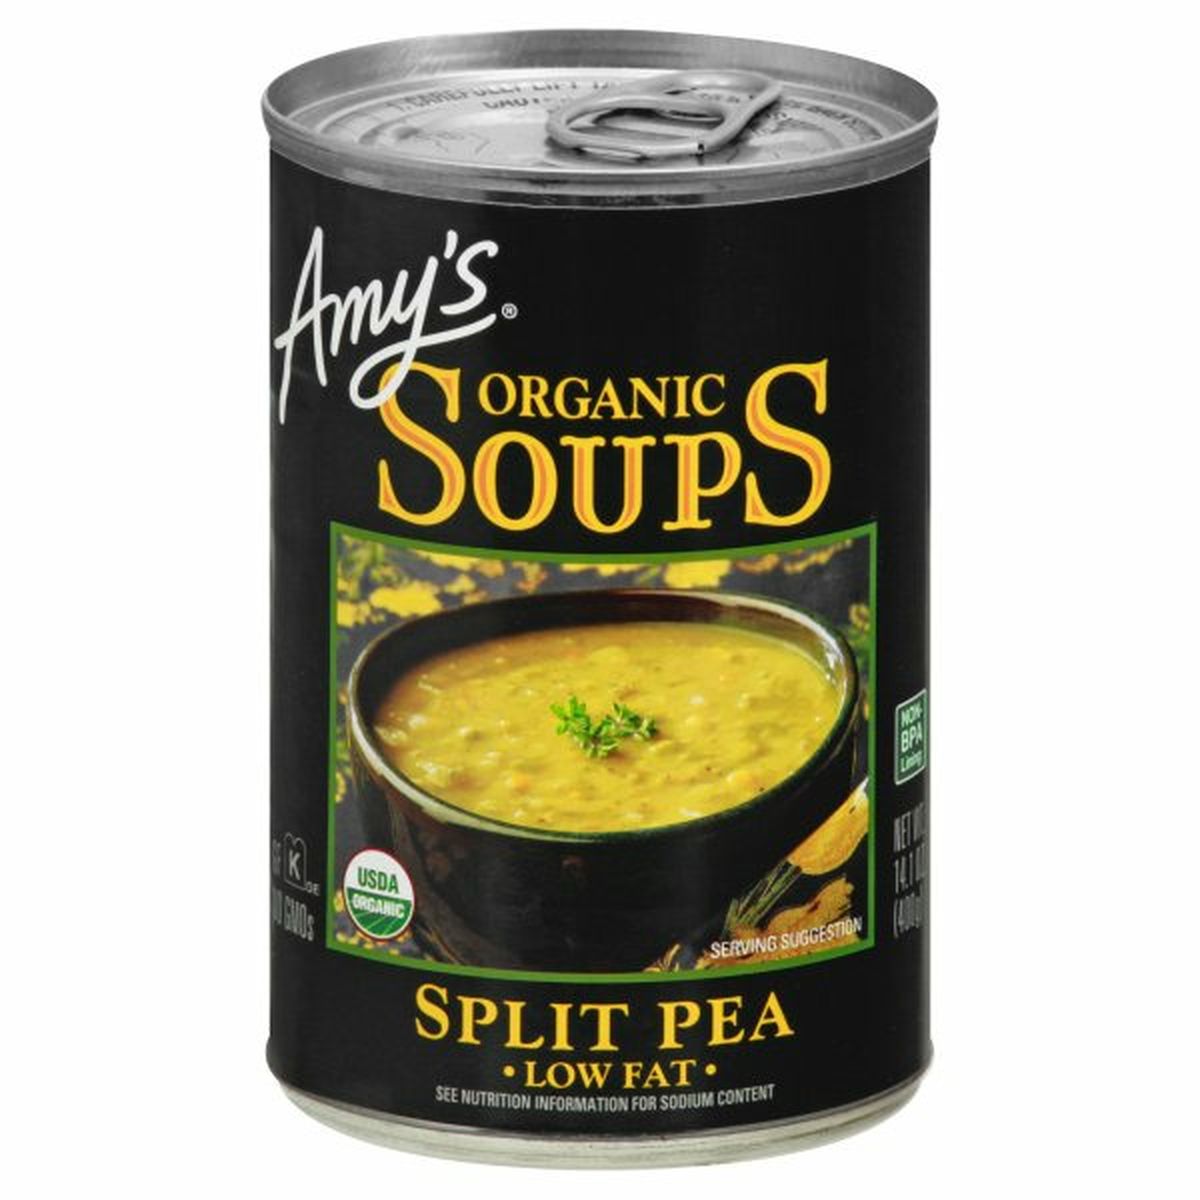 Calories in Amy's Kitchen Soups, Low Fat, Organic, Split Pea